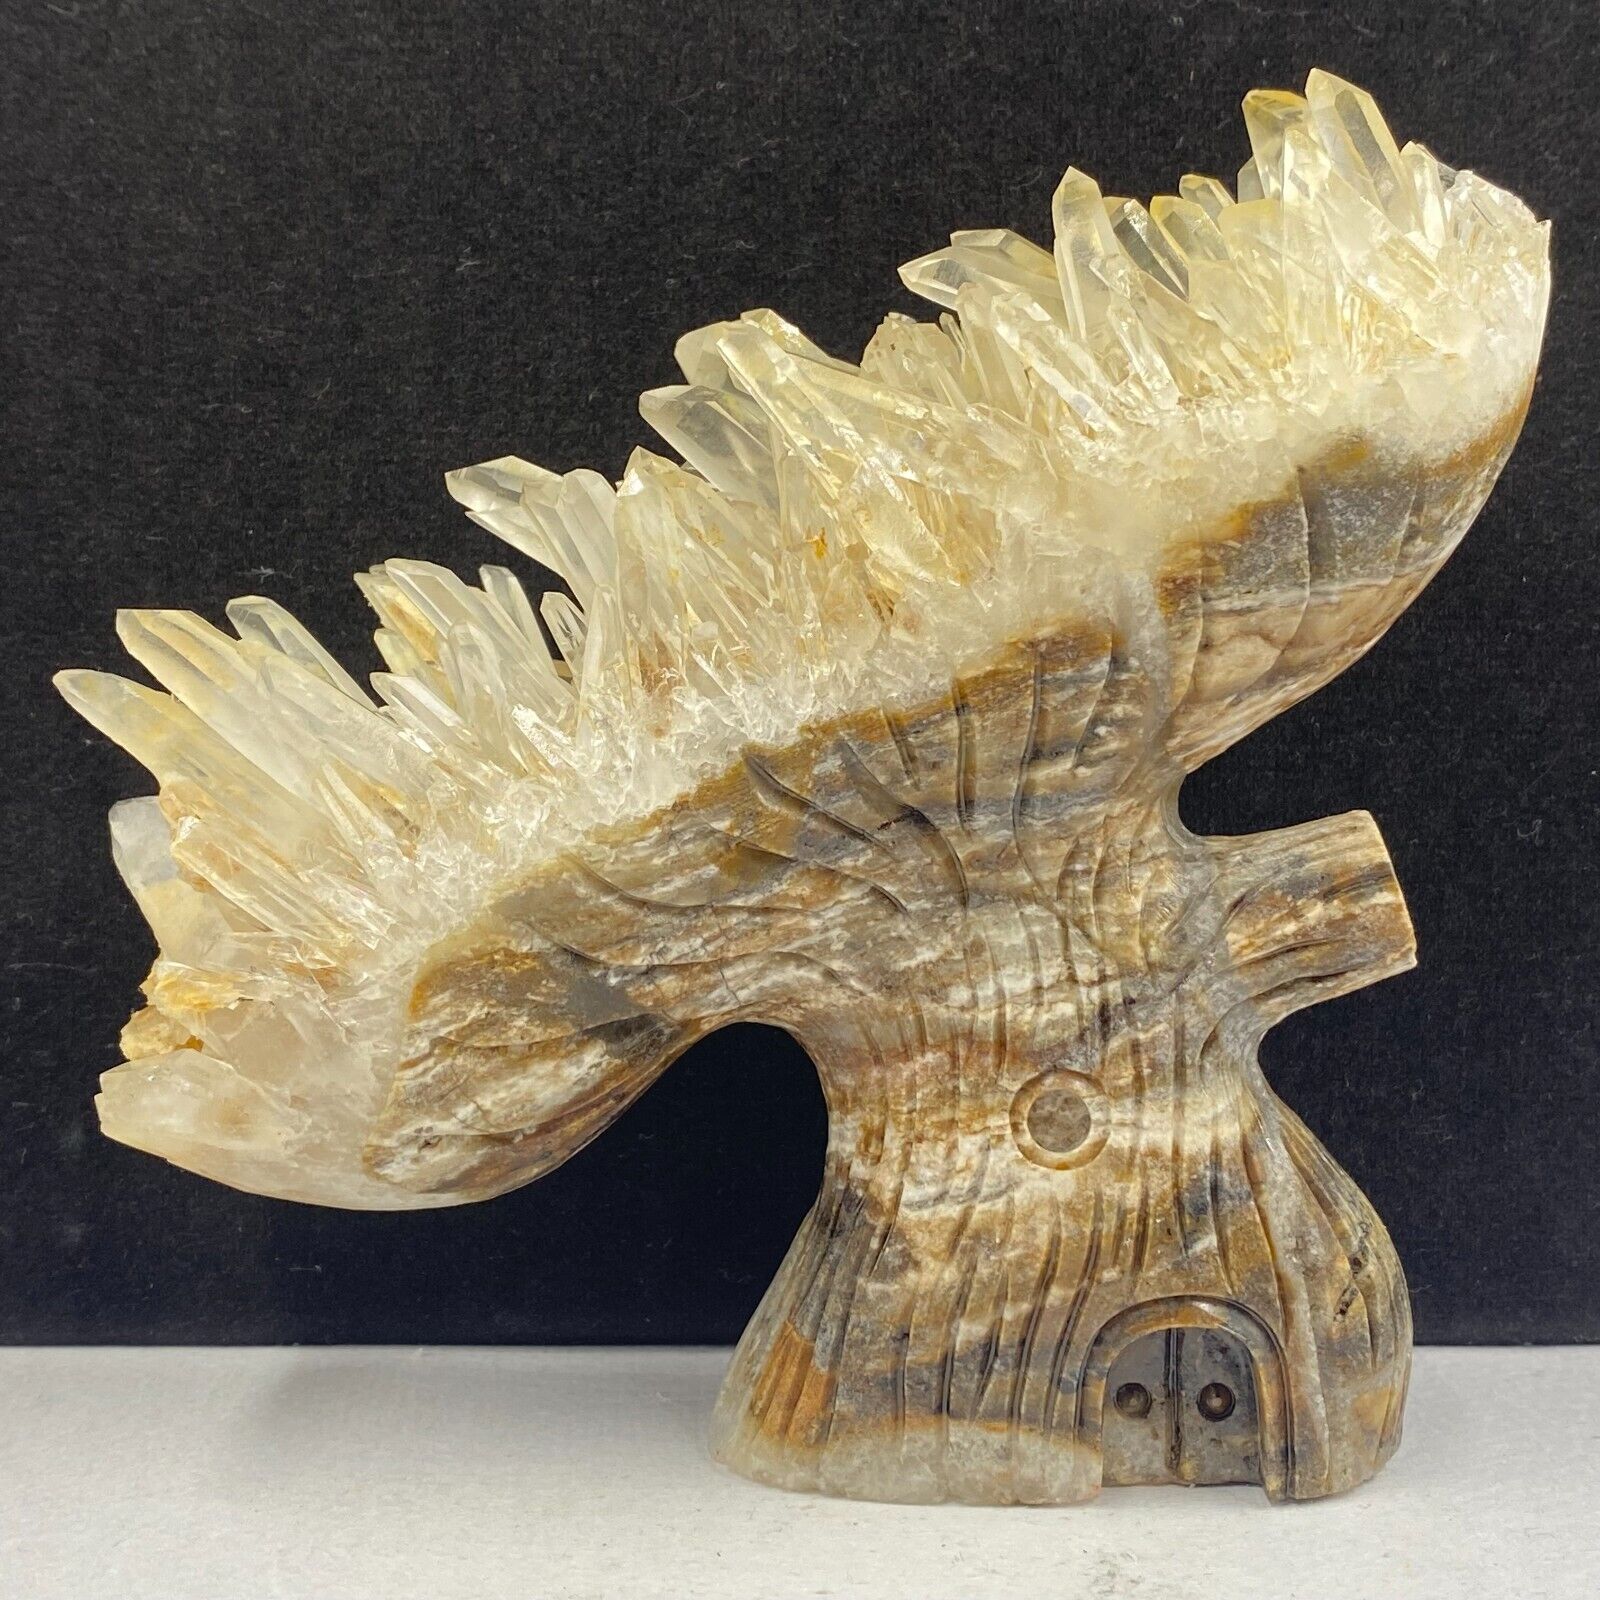 550g Natural quartz crystal cluster mineral specimen, hand-carved the Tree house